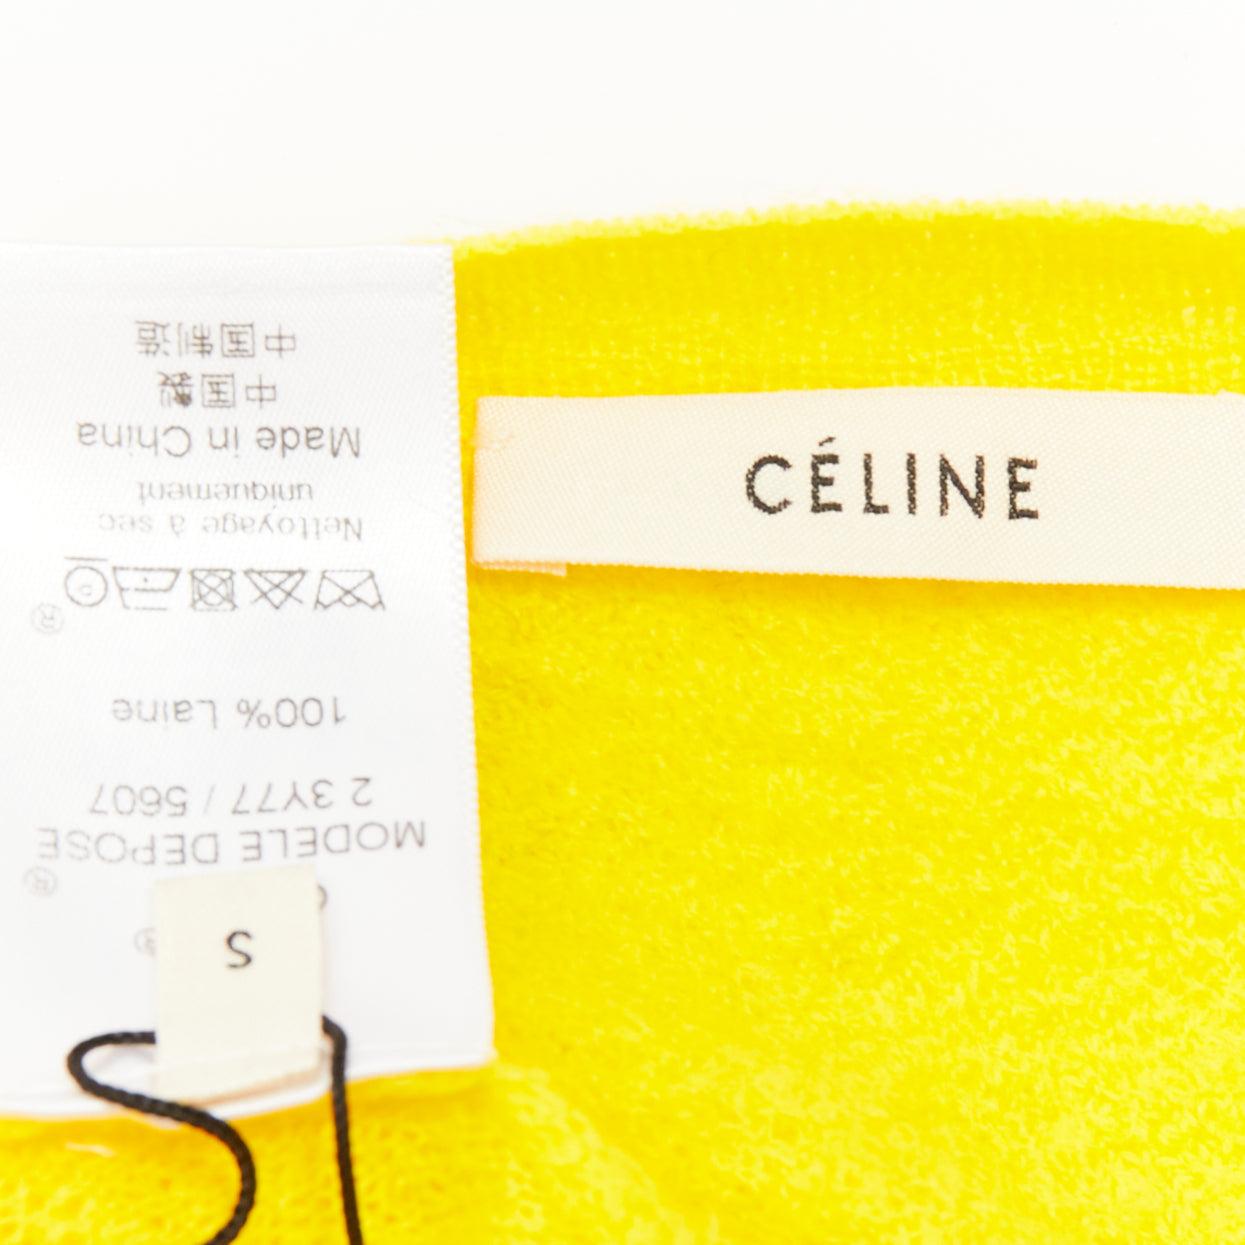 OLD CELINE Phoebe Philo 100% wool sunshine yellow crew neck sweater S For Sale 4